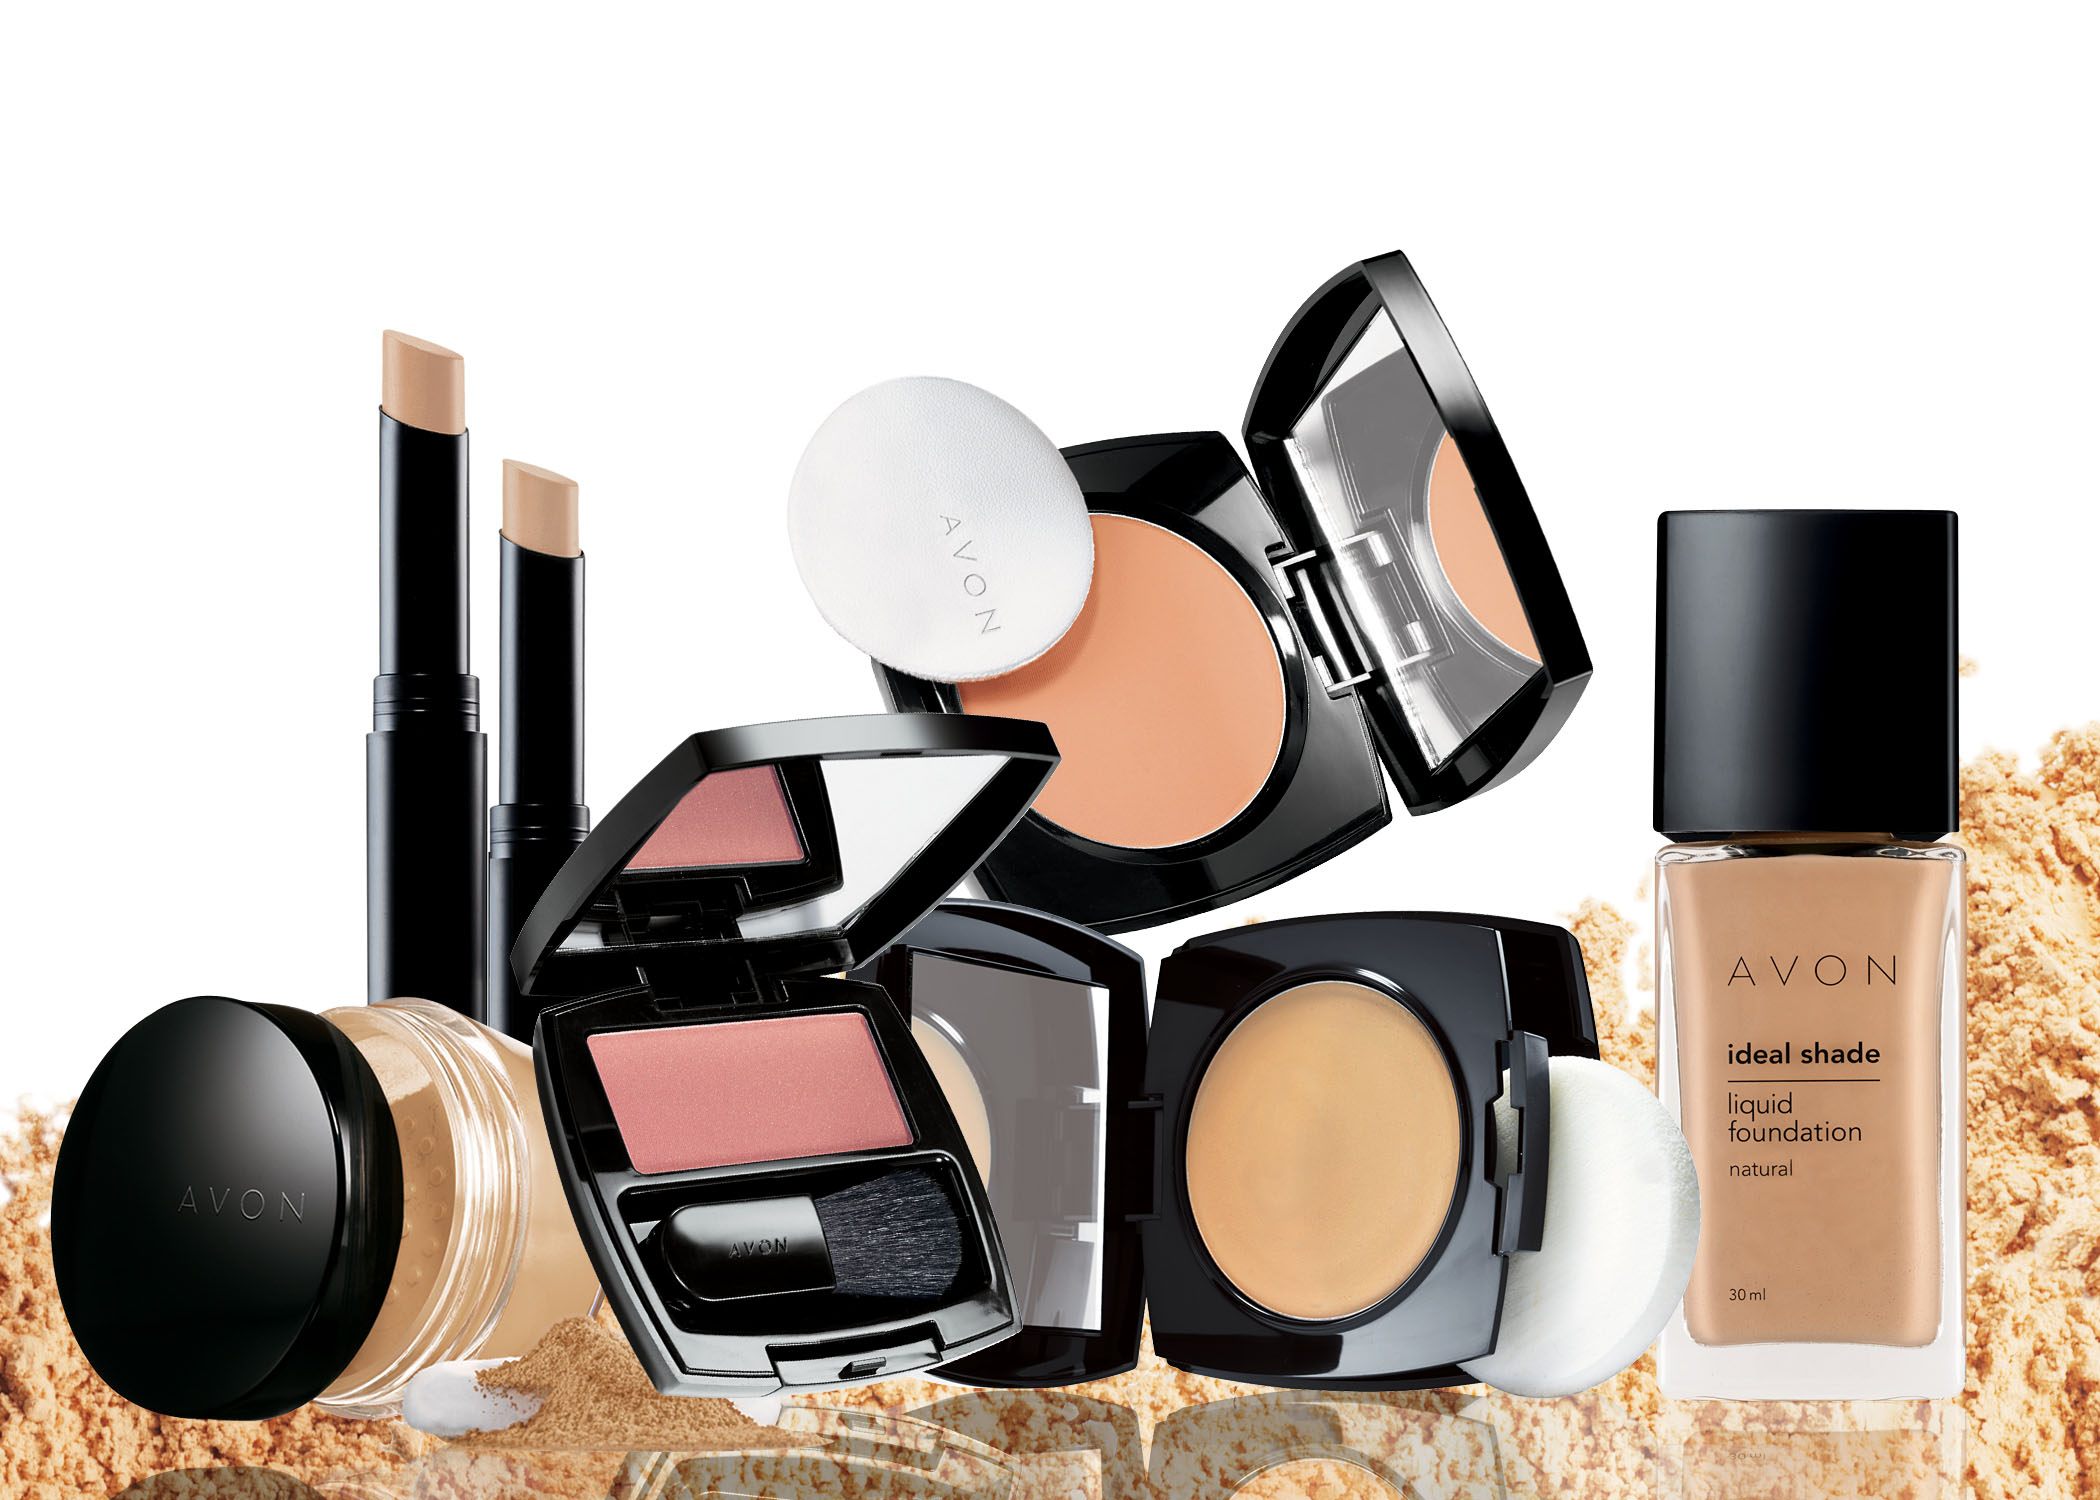 Top 10 Best Makeup Brands In The World 